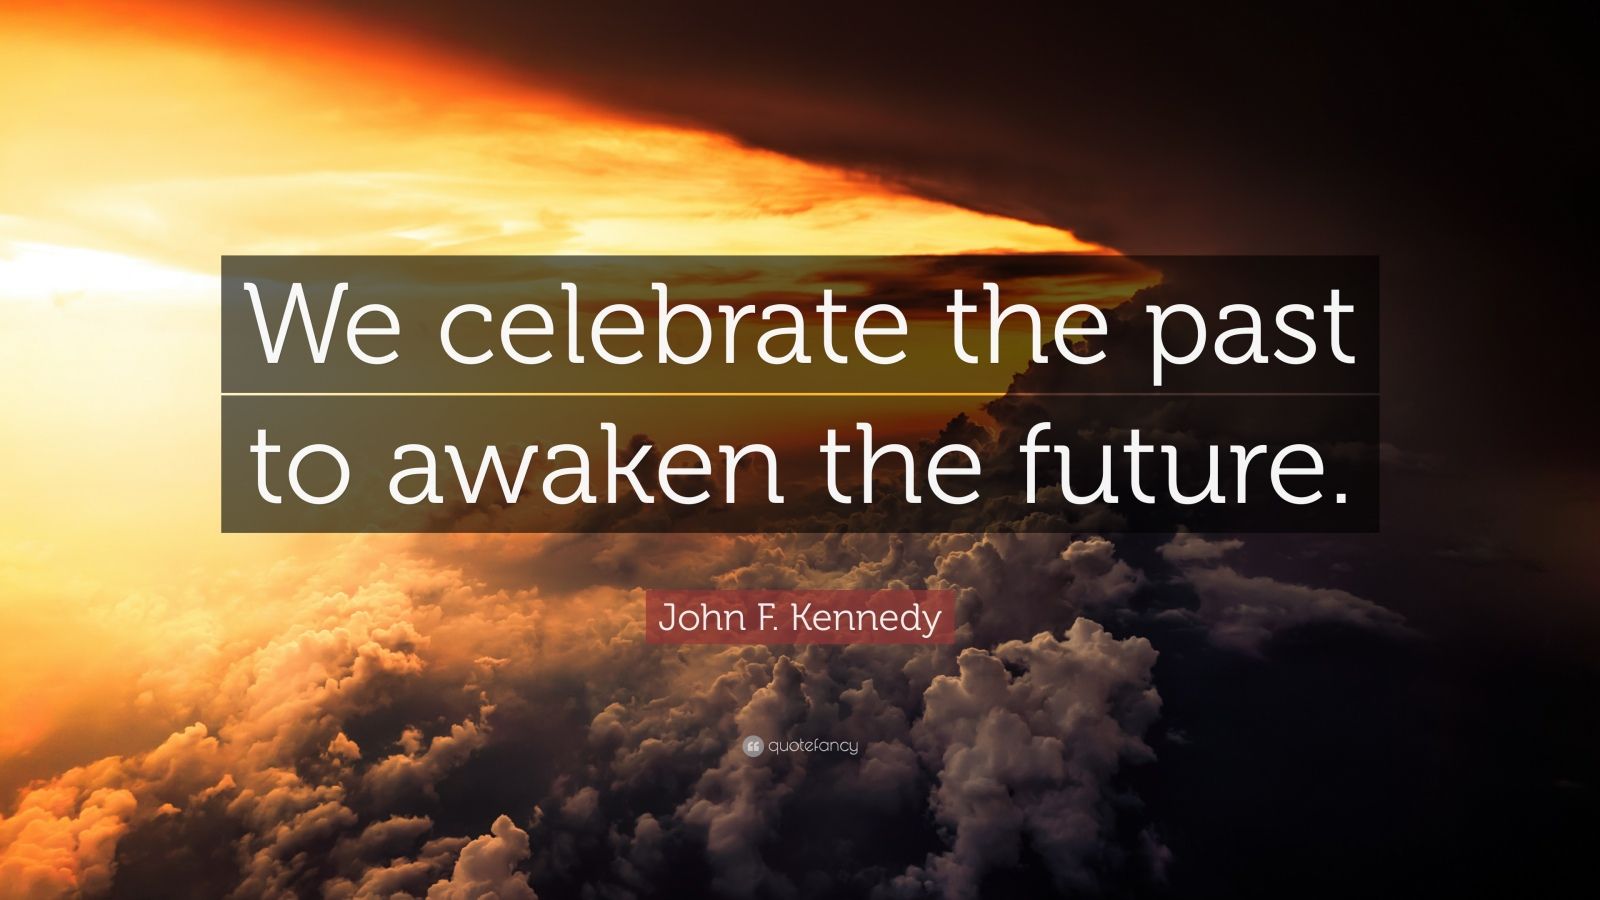 John F. Kennedy Quote: “We celebrate the past to awaken the future ...